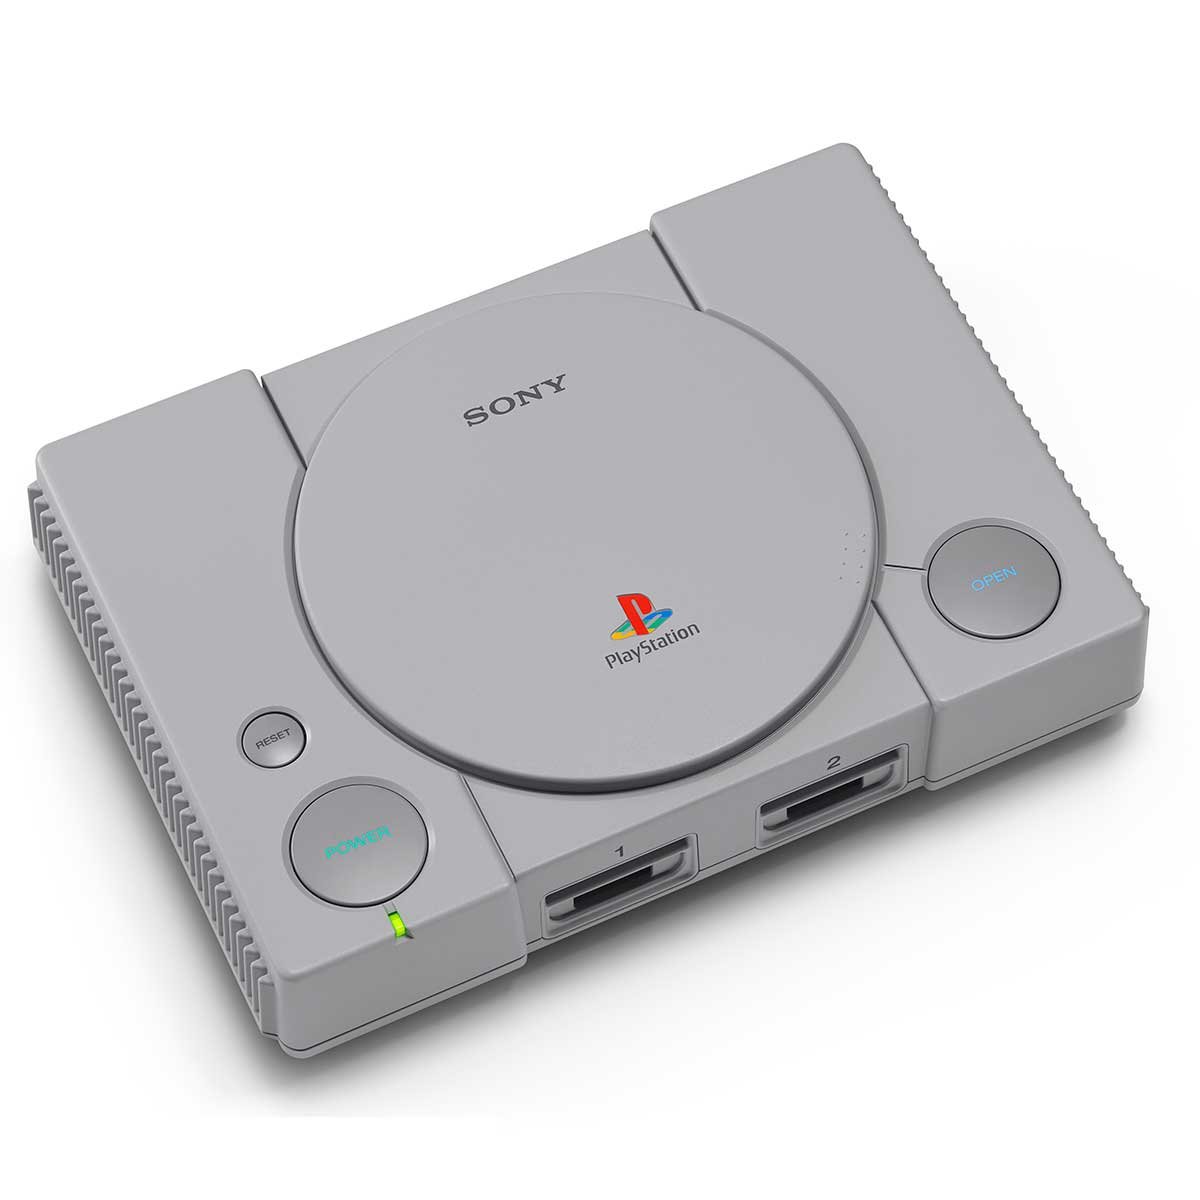 Consola Playstation Classic Mini